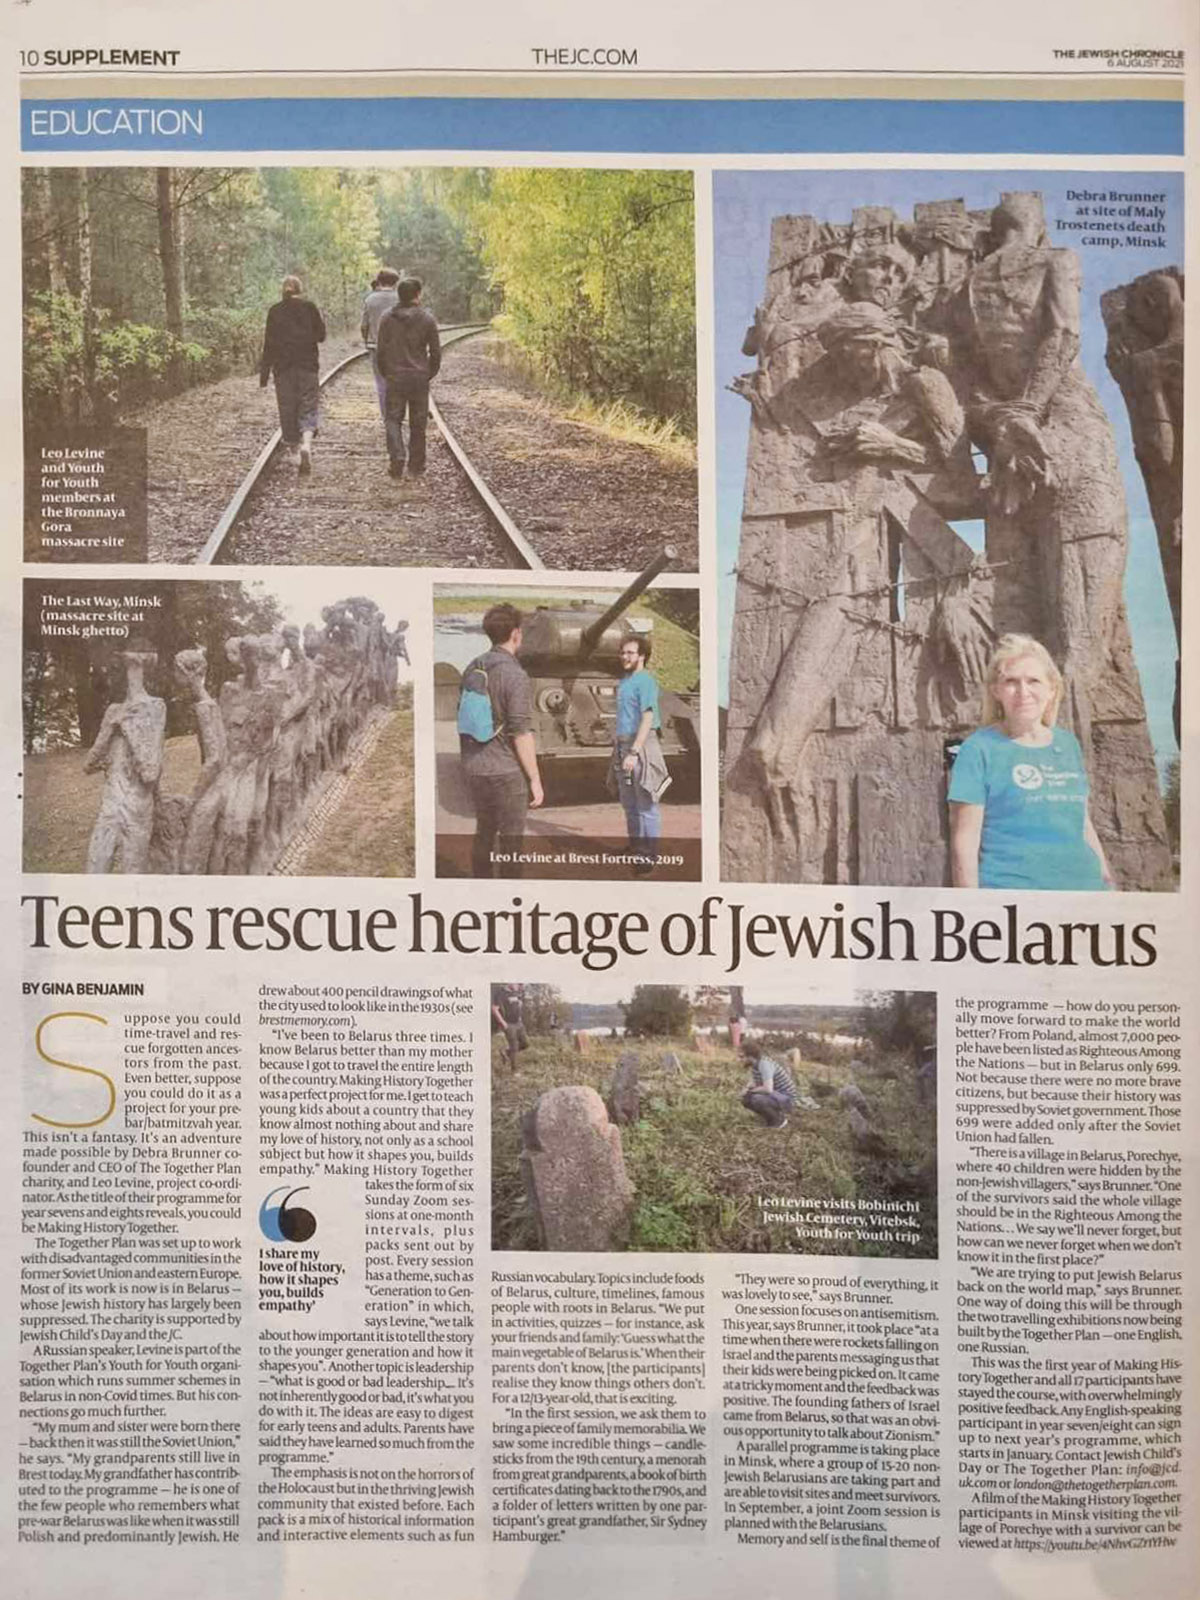 Teenagers rescue heritage of Jewish Belarus